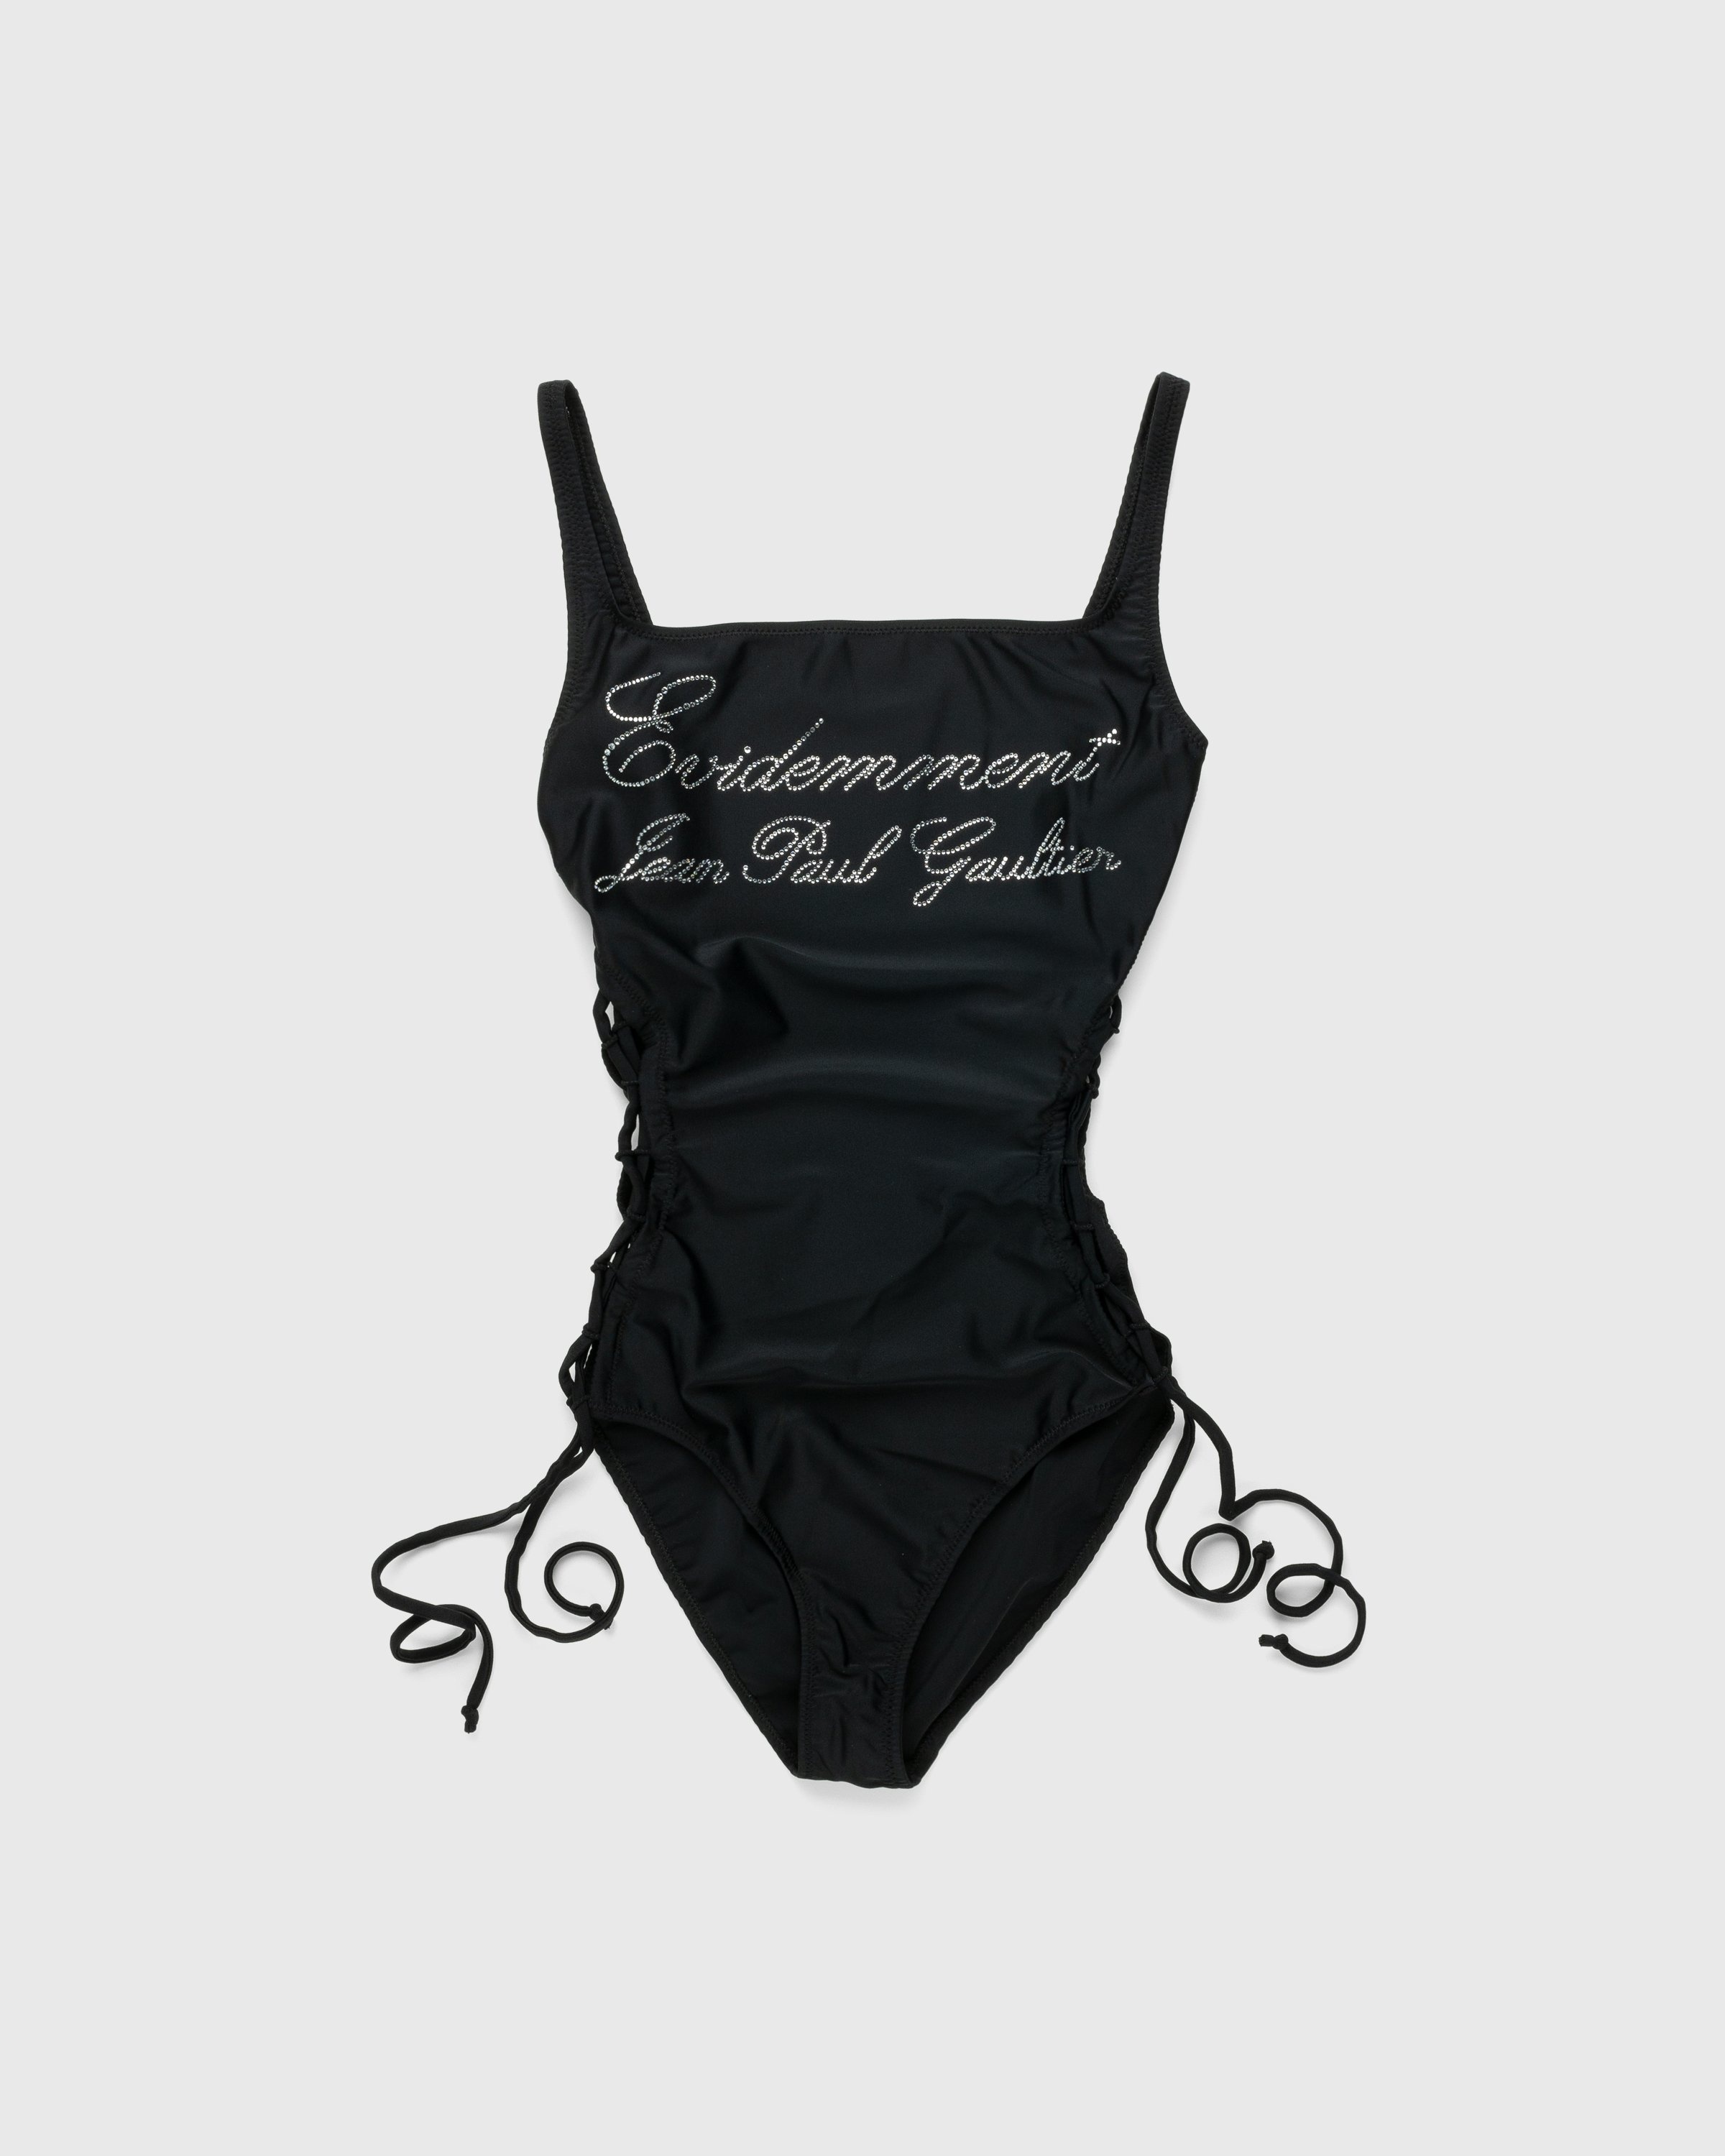 Jean Paul Gaultier – Évidemment Swimsuit Black - Swimwear - Black - Image 1